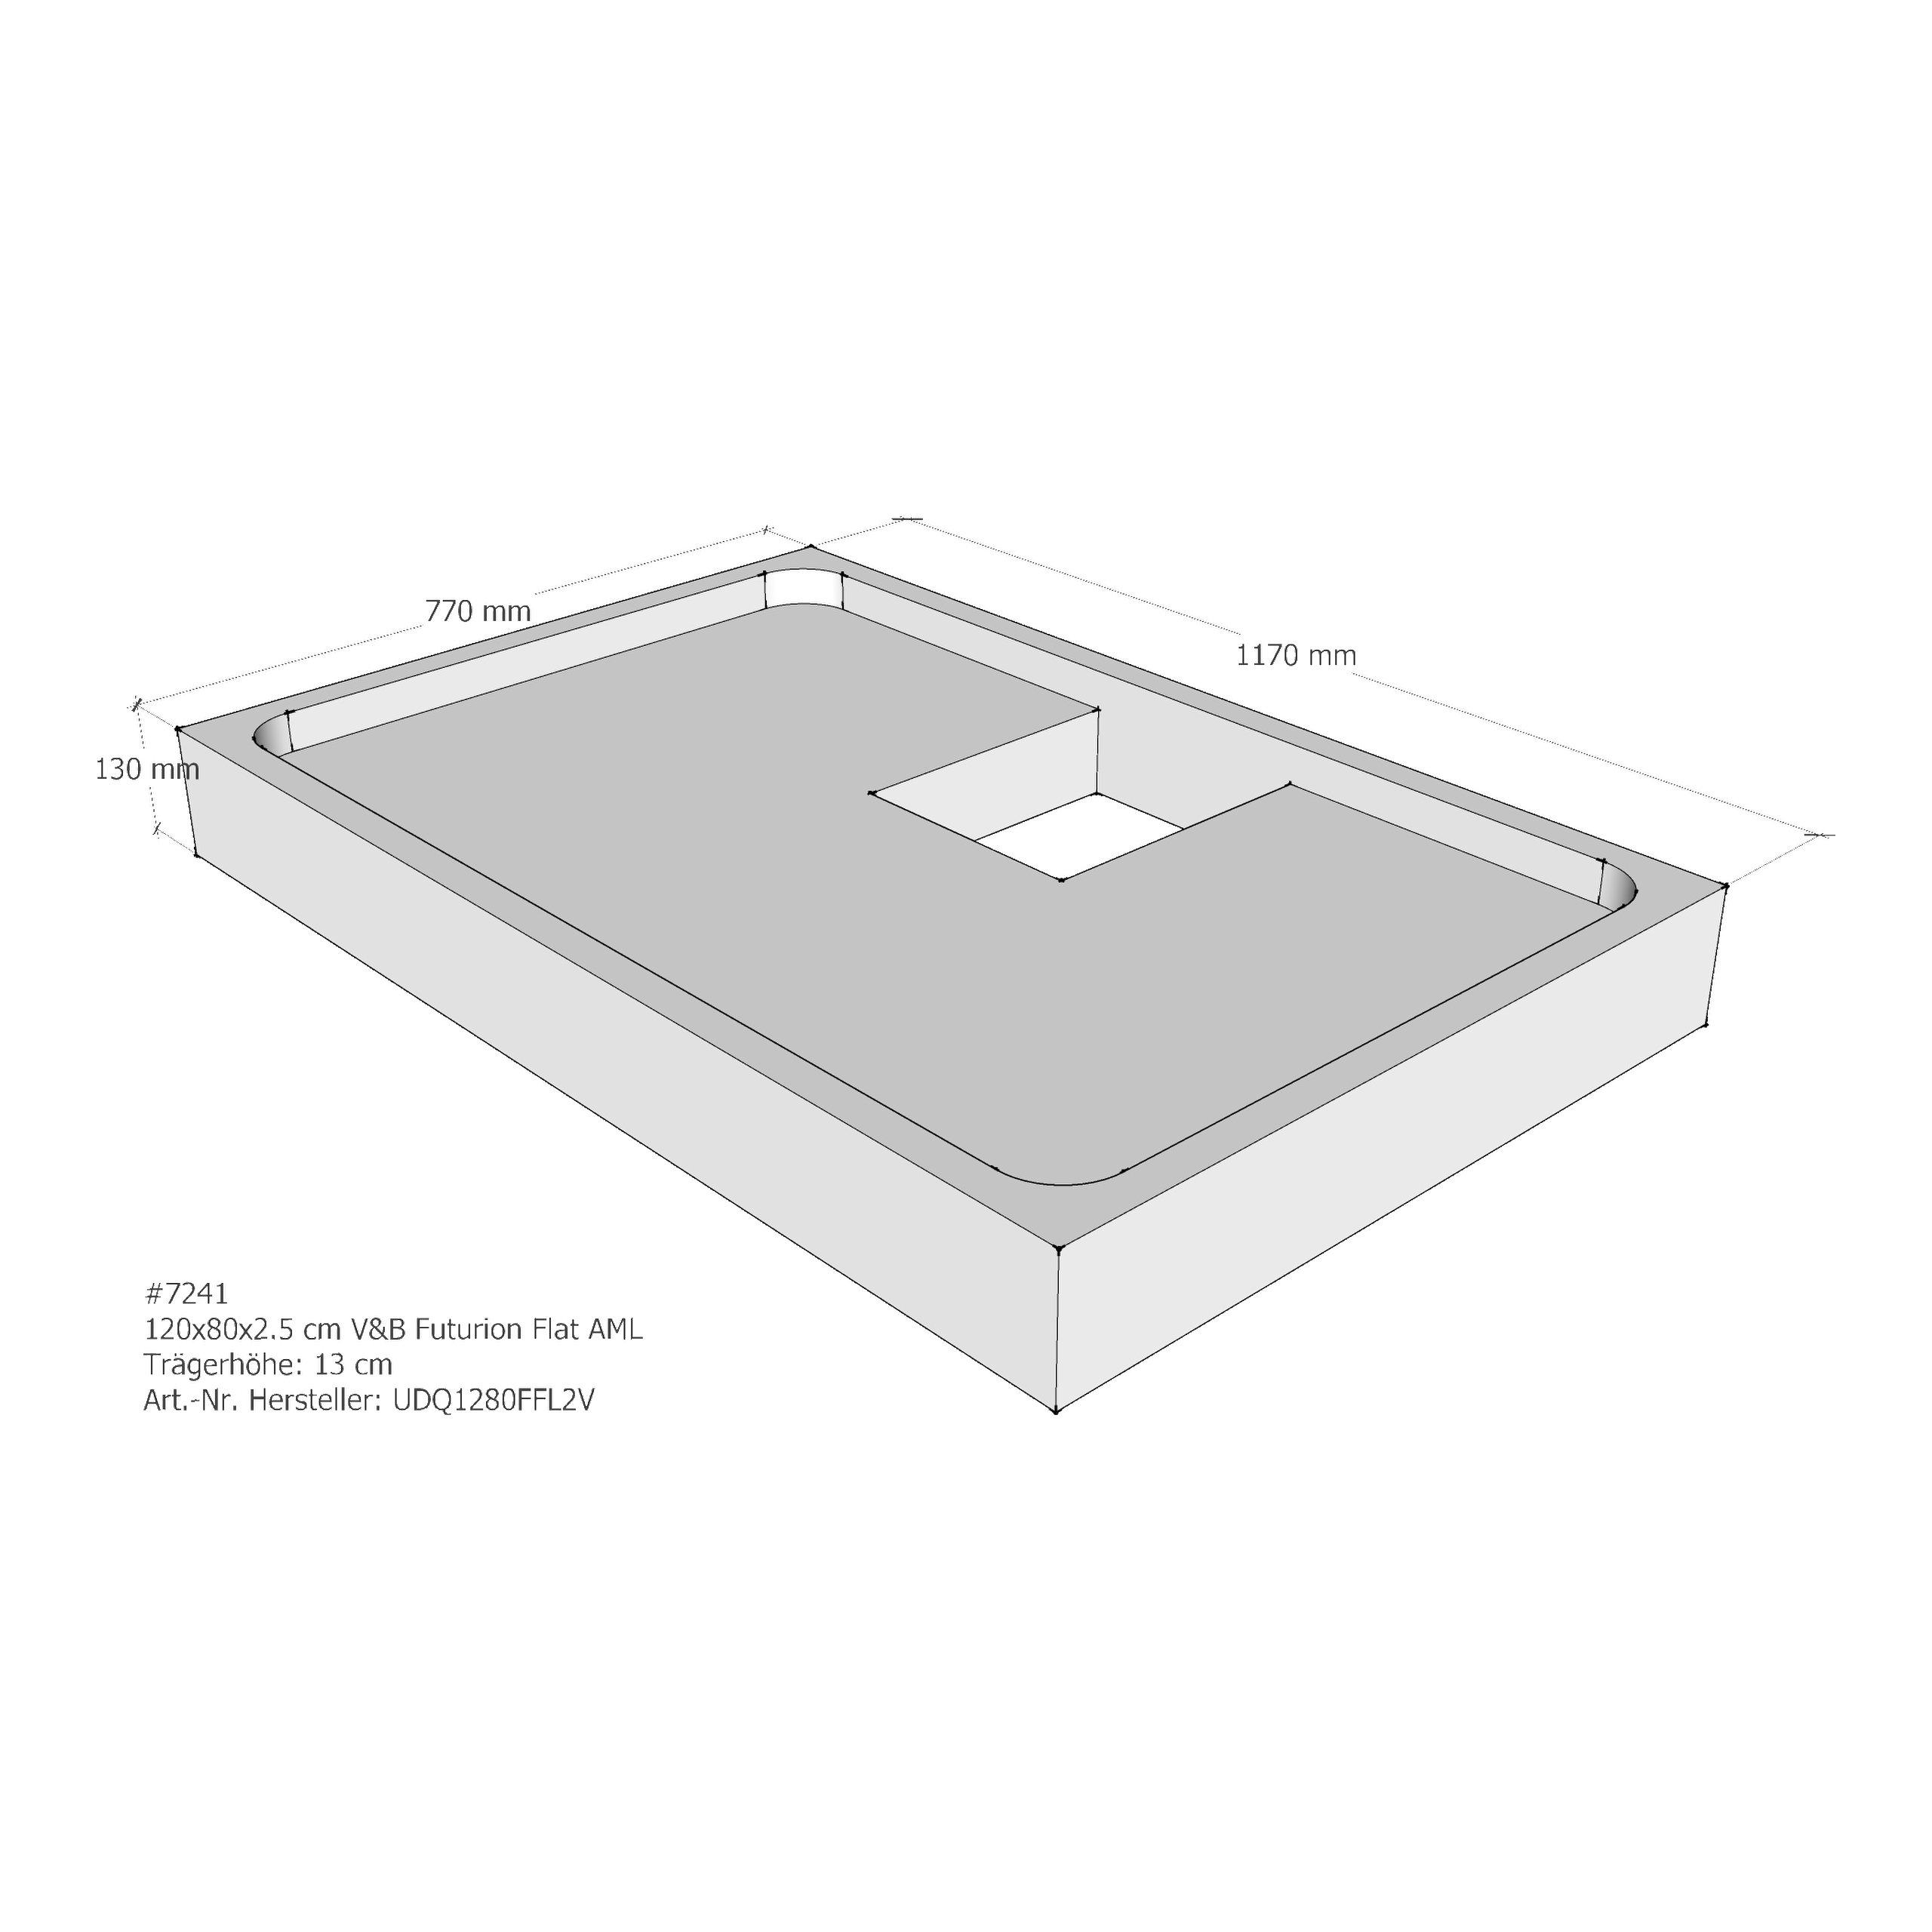 Duschwannenträger für Villeroy & Boch Futurion Flat 120 × 80 × 2,5 cm